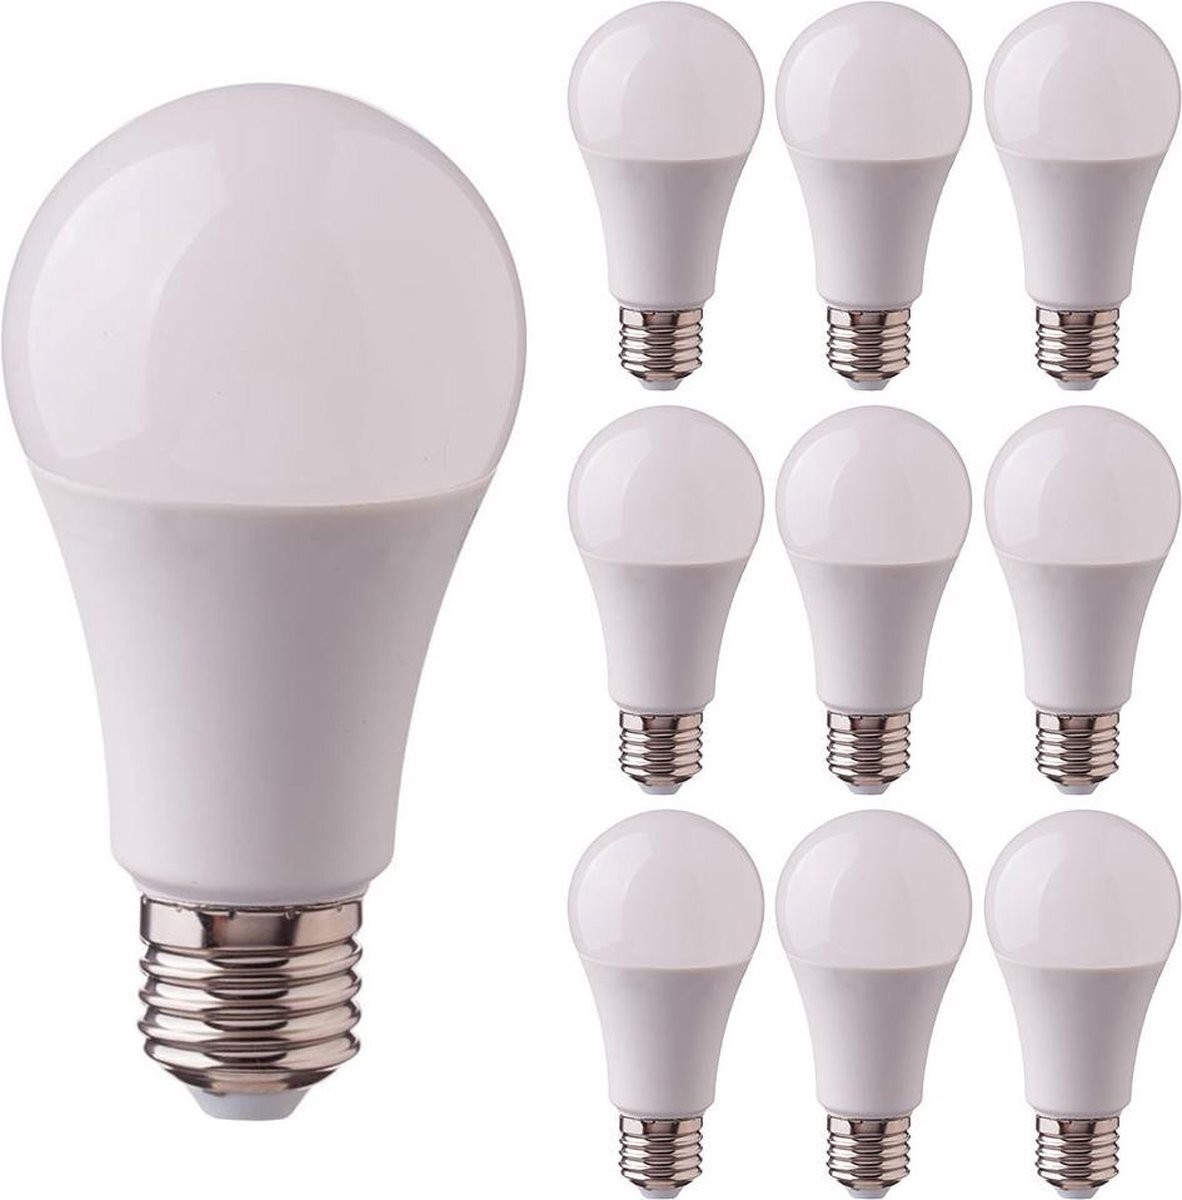 V-tac Voordeelpak 10 stuks E27 LED Lamp 9 Watt A60 4000K Vervangt 60 Watt A60 peervorm